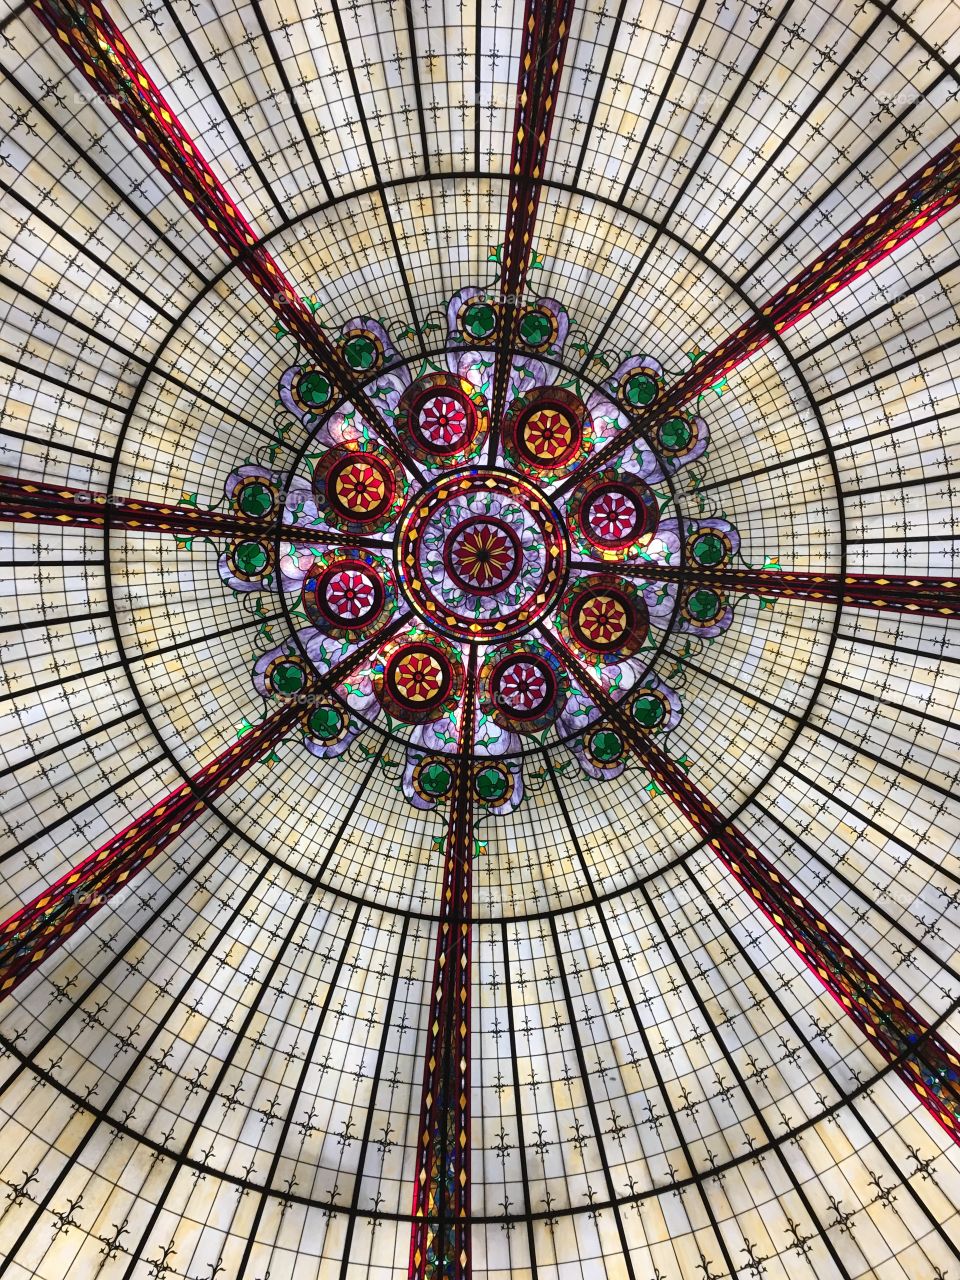 Circular dome ceiling 